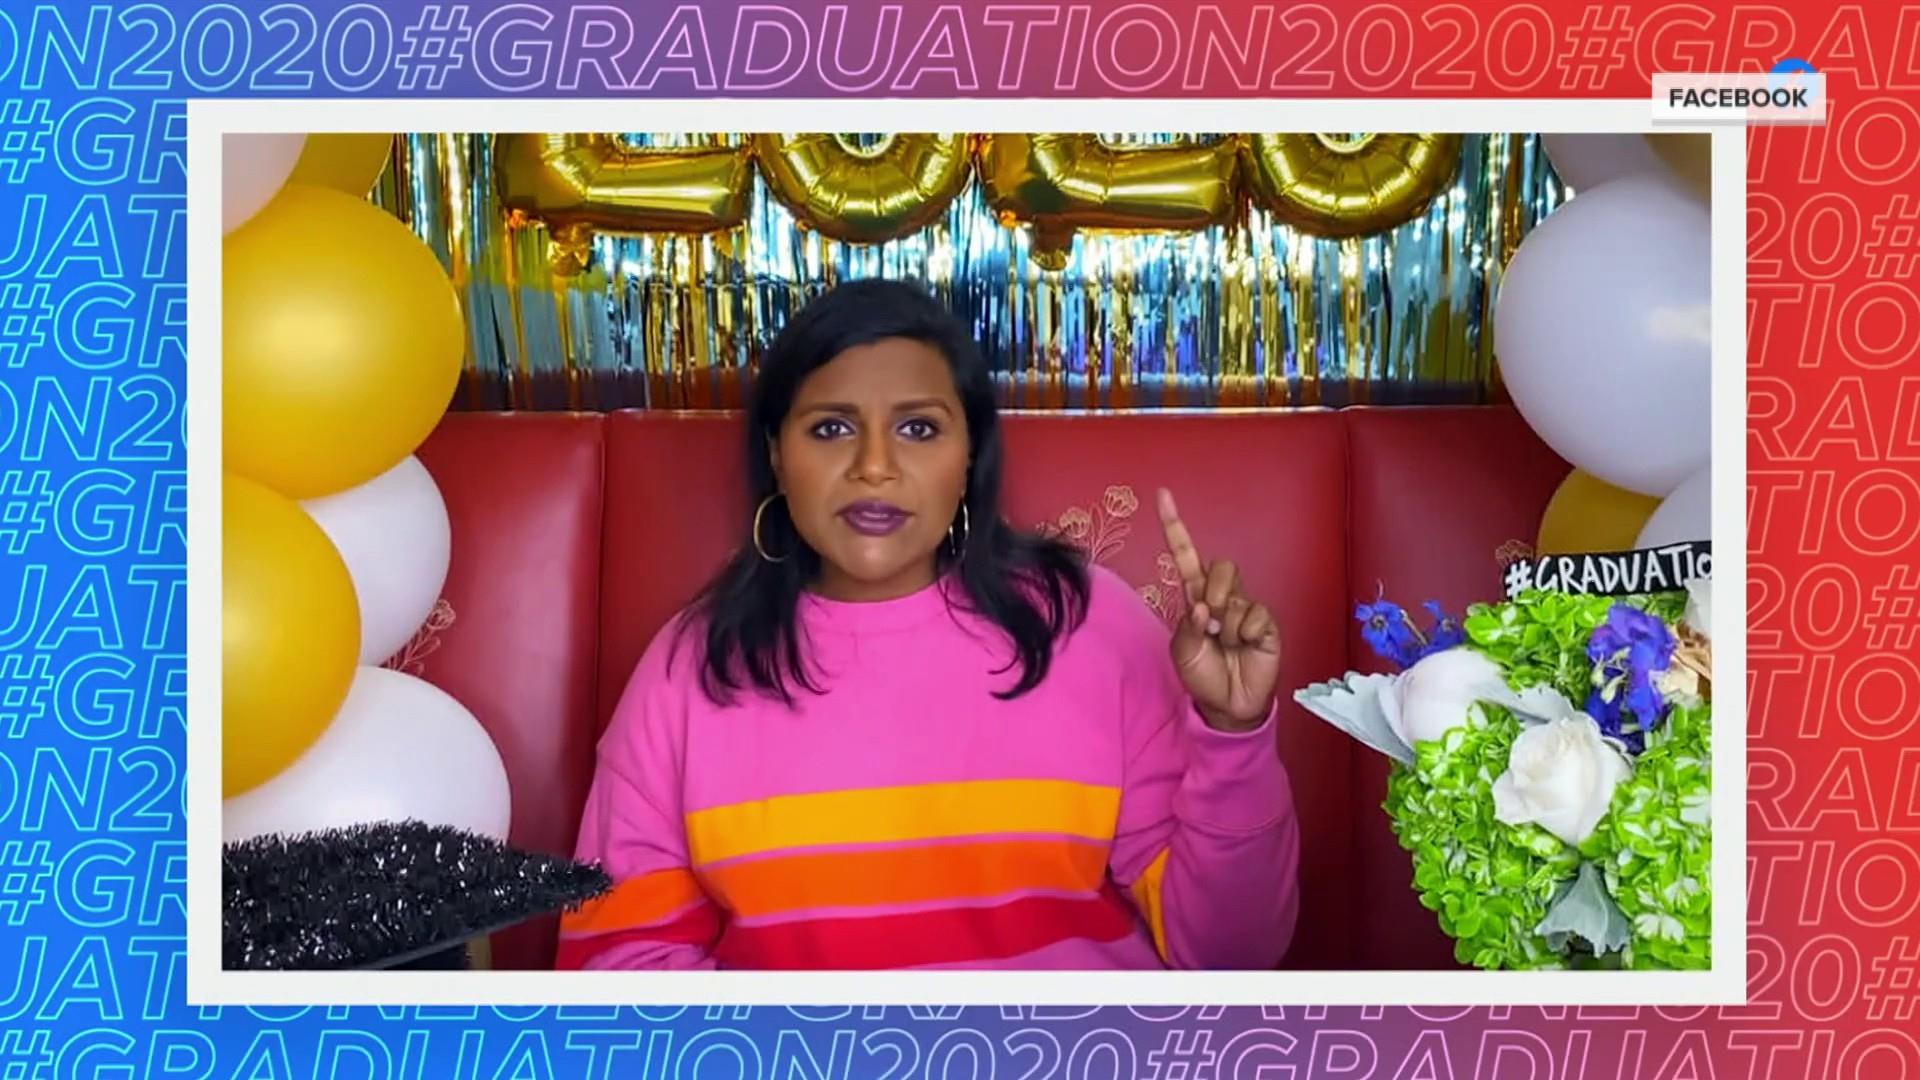 The Office co-stars host graduation livestream on Facebook